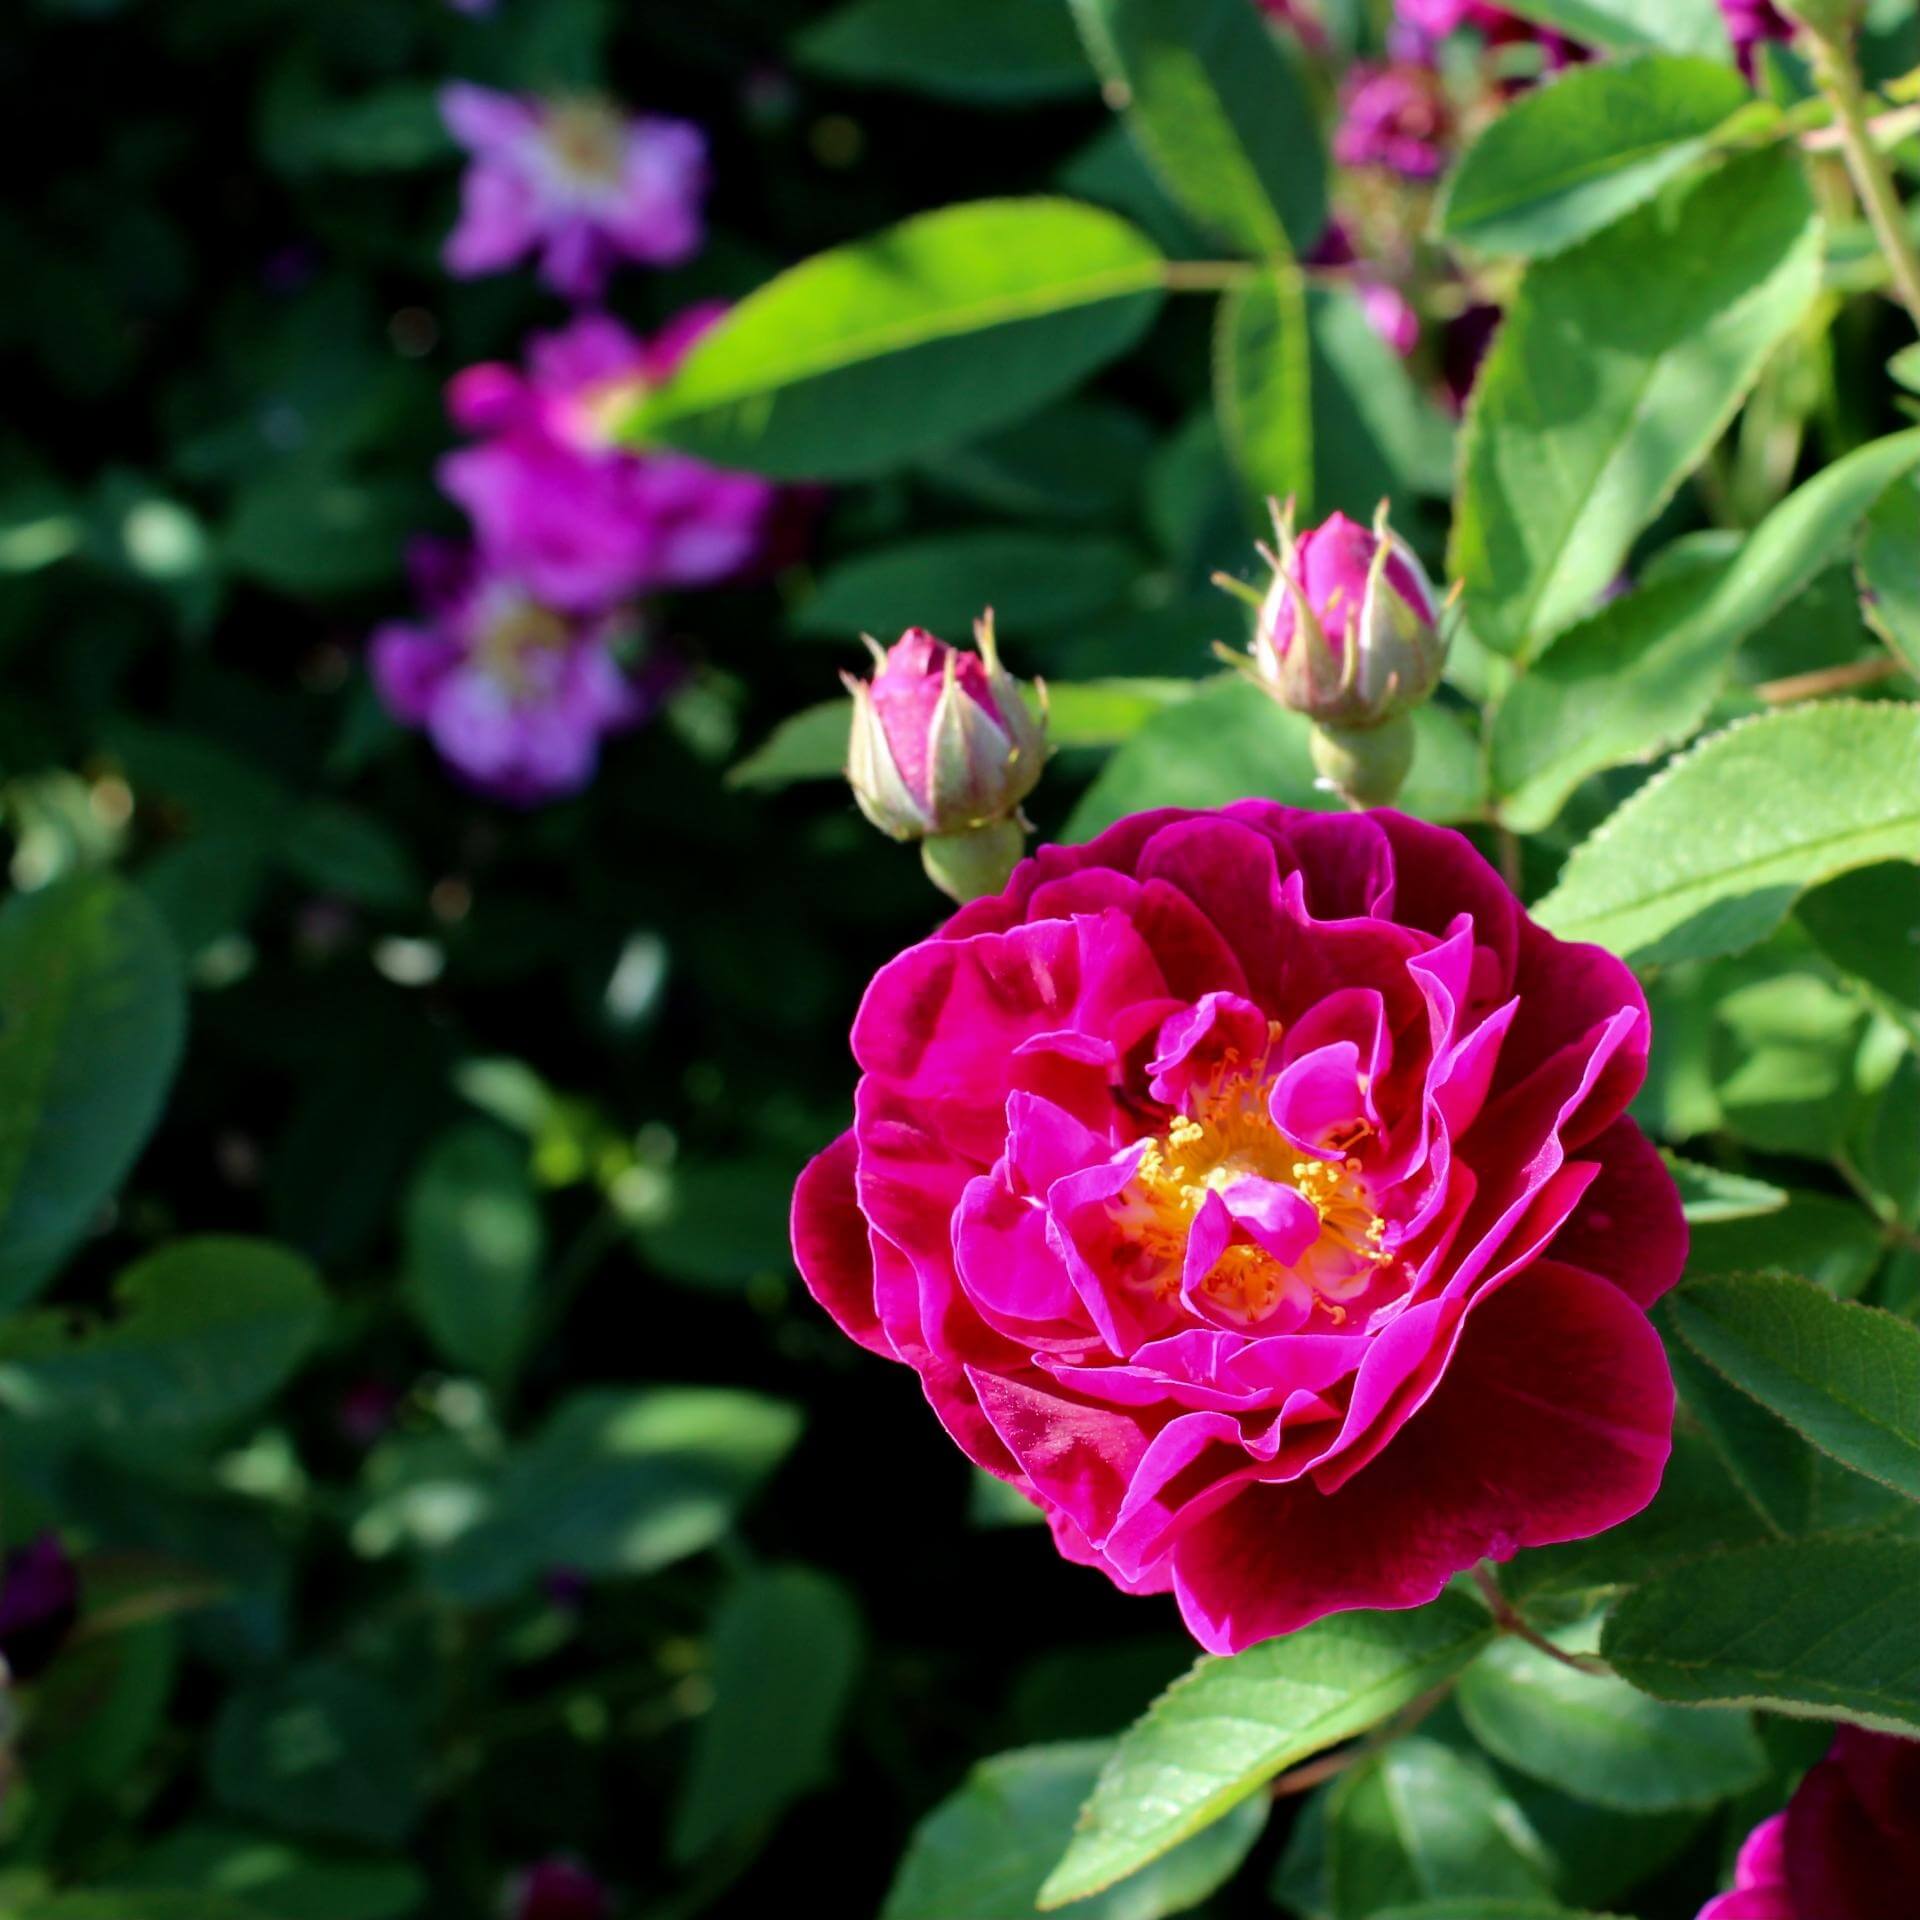 Strauchrose 'Tuscany' (Rosa gallica 'Tuscany')